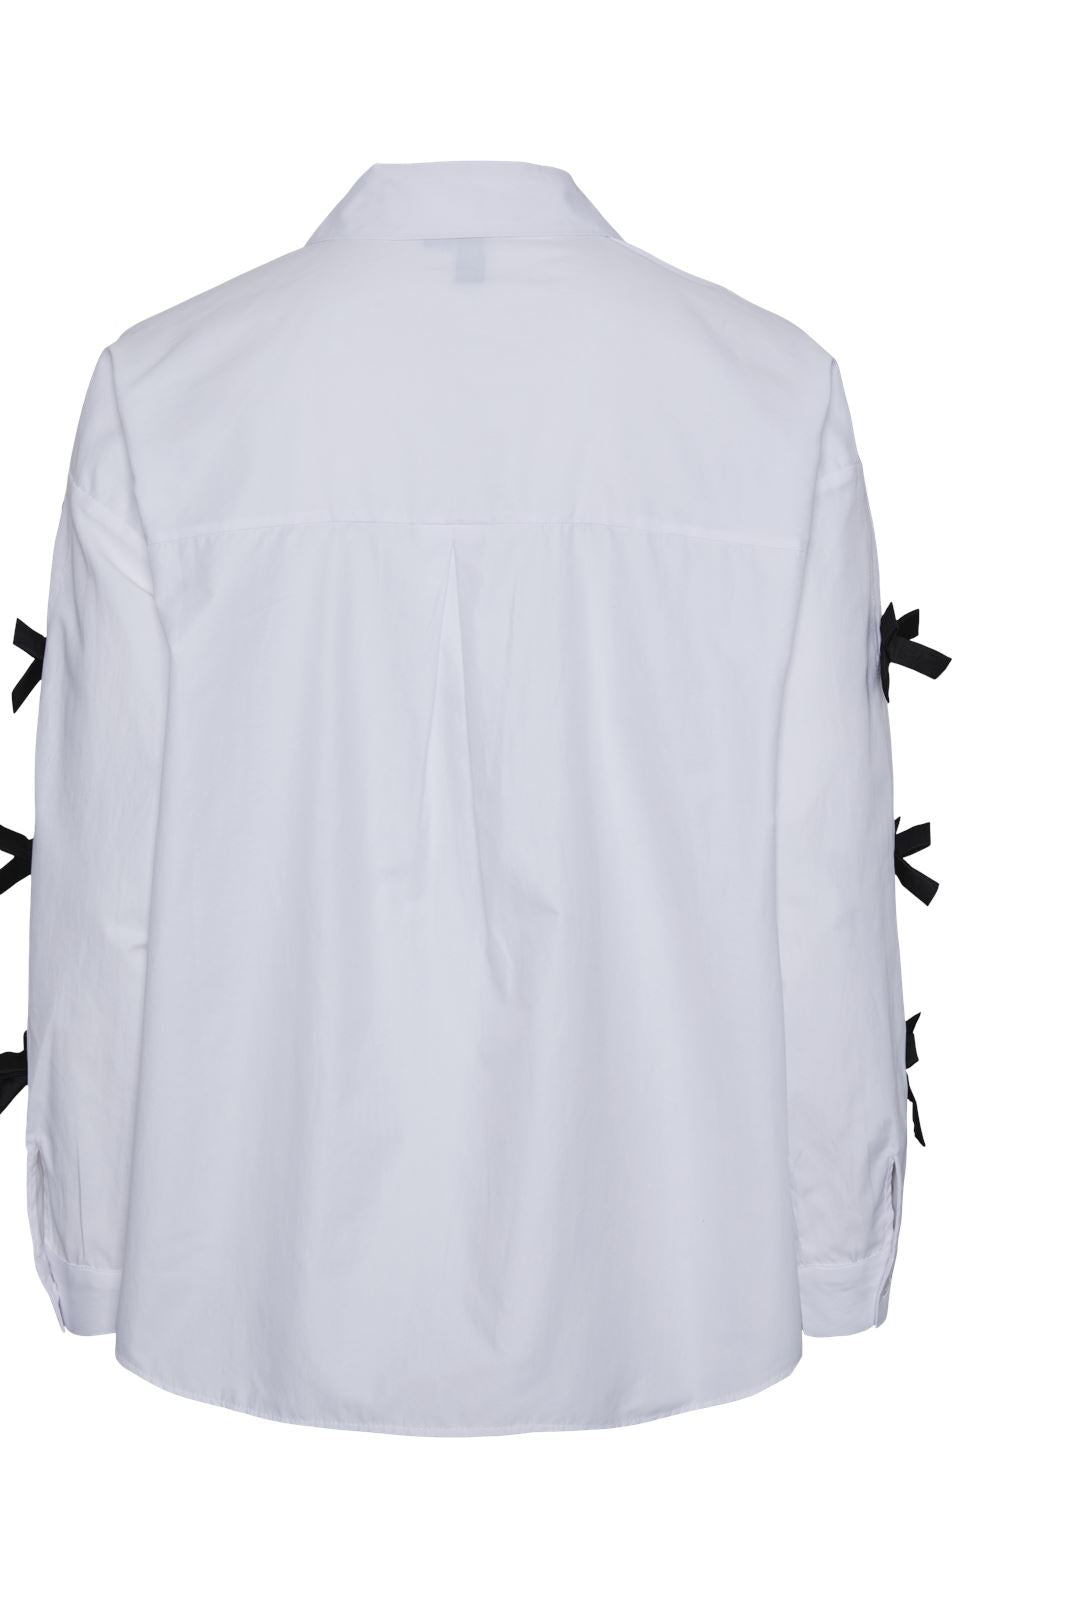 Pieces - Pcbell Ls Shirt Jit - 4661230 Bright White Black Bows